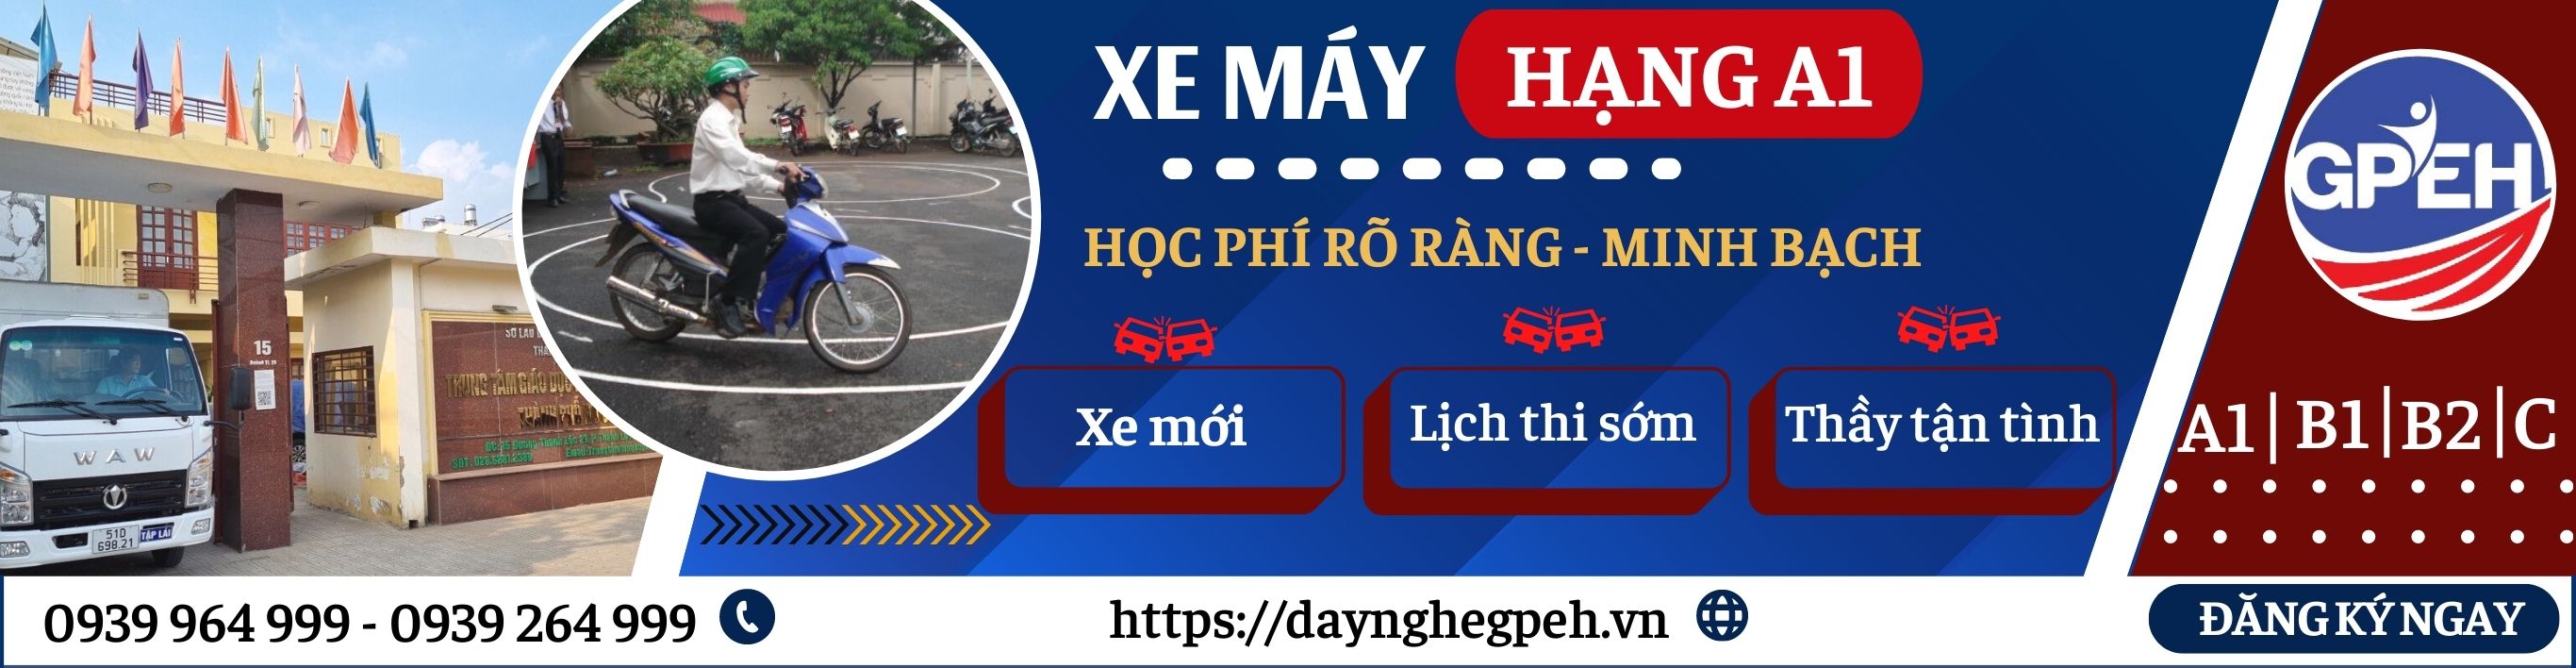 xe-may-hang-a1-gpeh_-06-12-2022-11-36-16.jpg